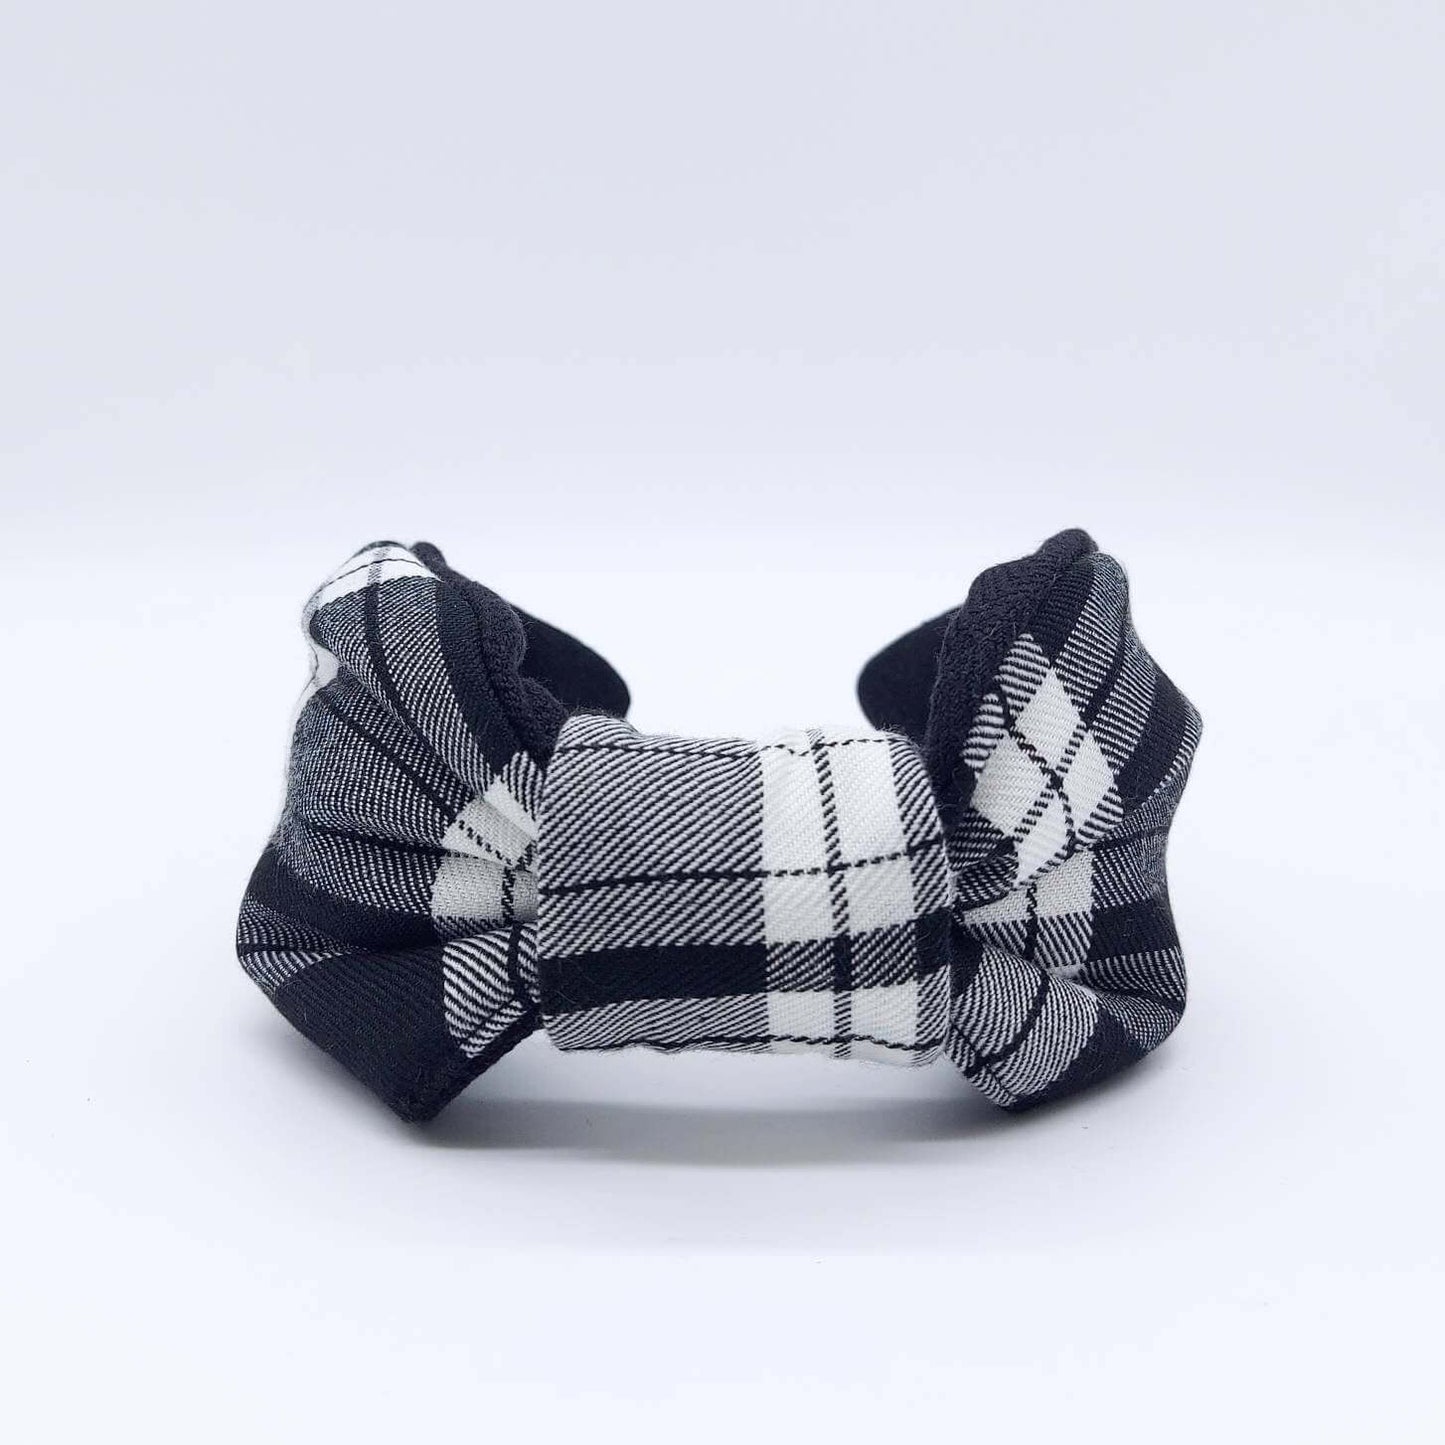 A bow-style, black and white, tartan plaid fabric headband with plain black lining underneath.